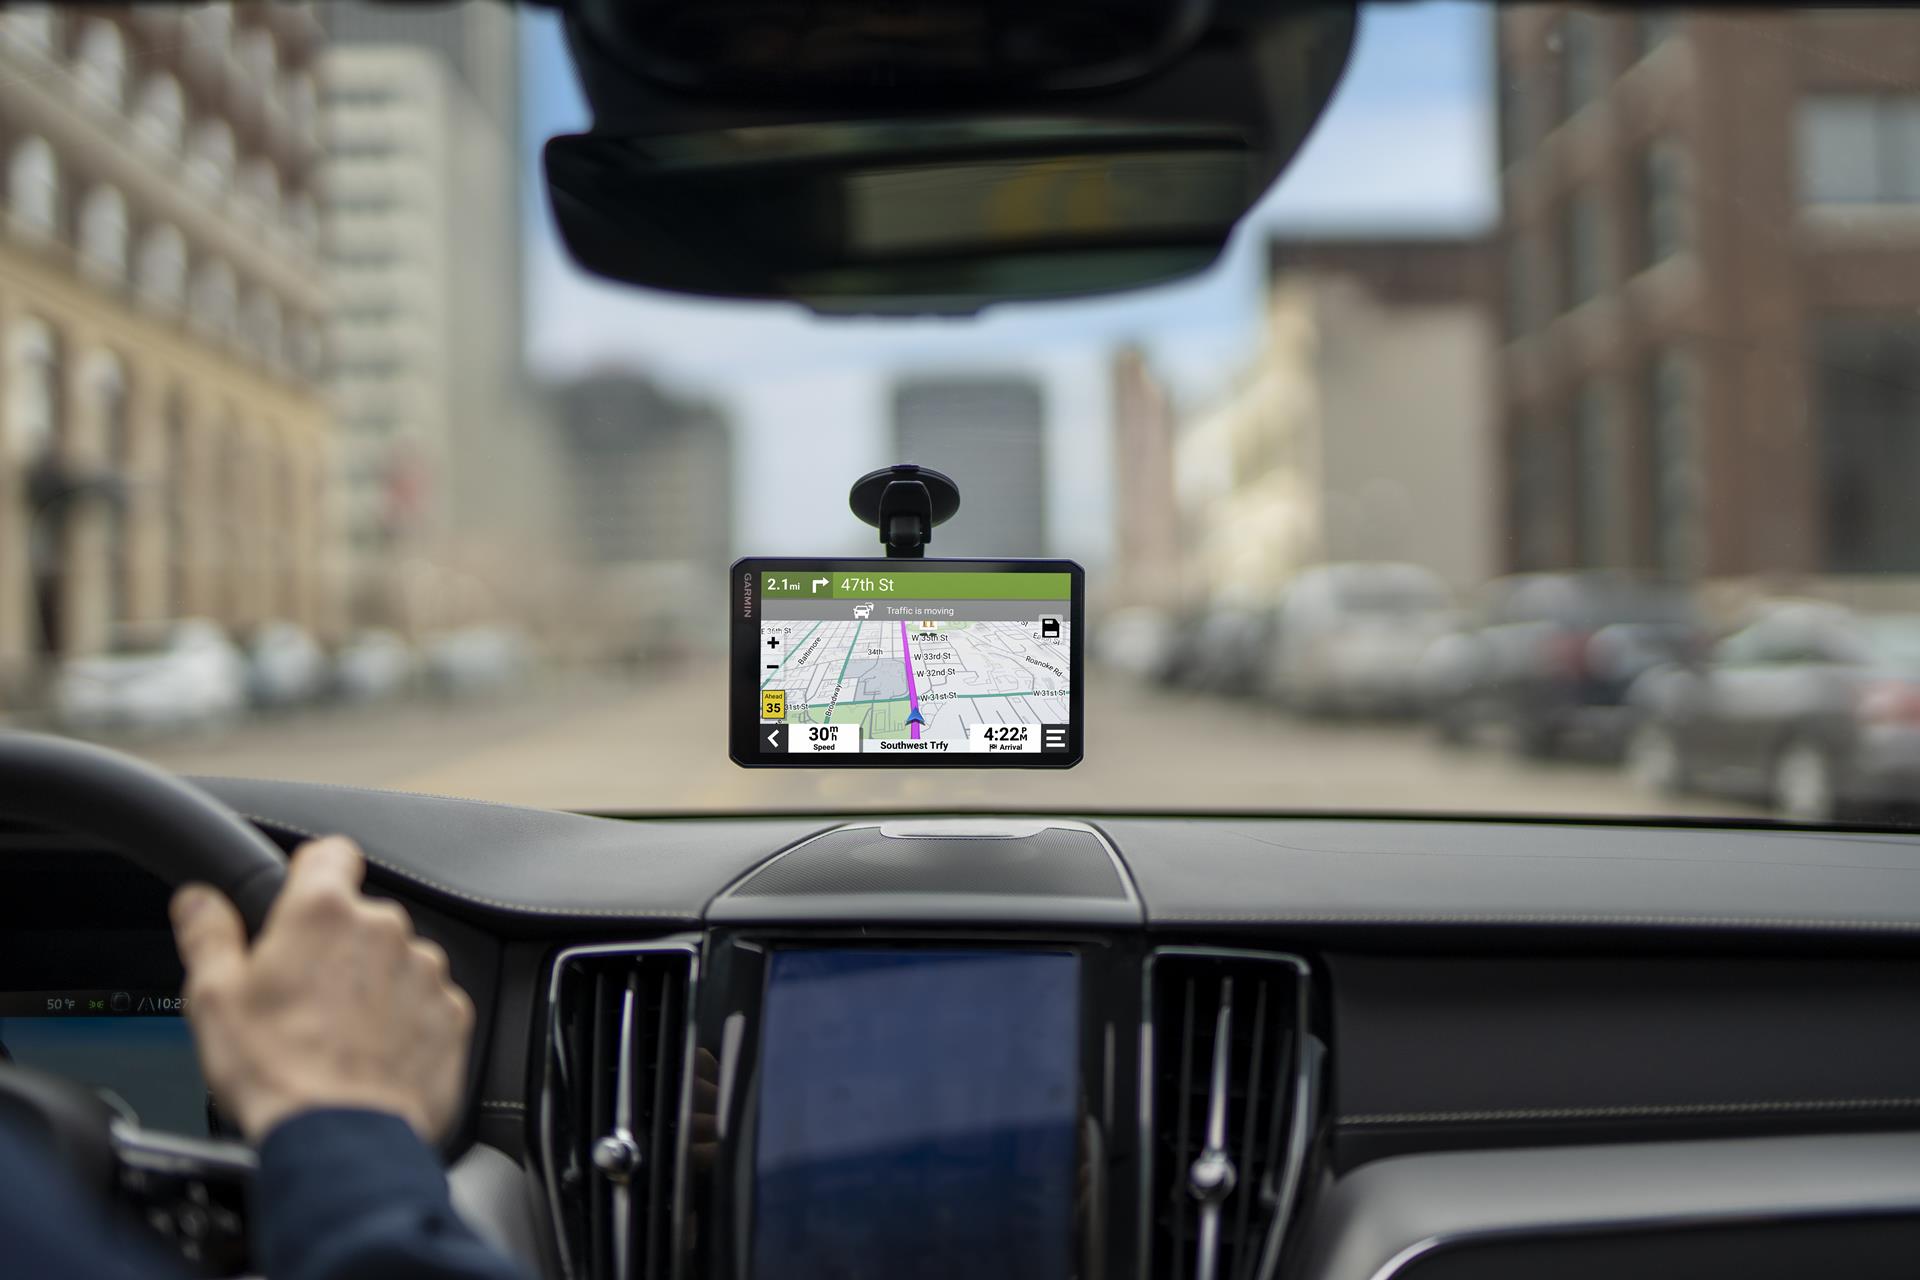 Garmin DriveCam 76 7" GPS Sat Nav with Built-in Dash Cam +Digital Traffic